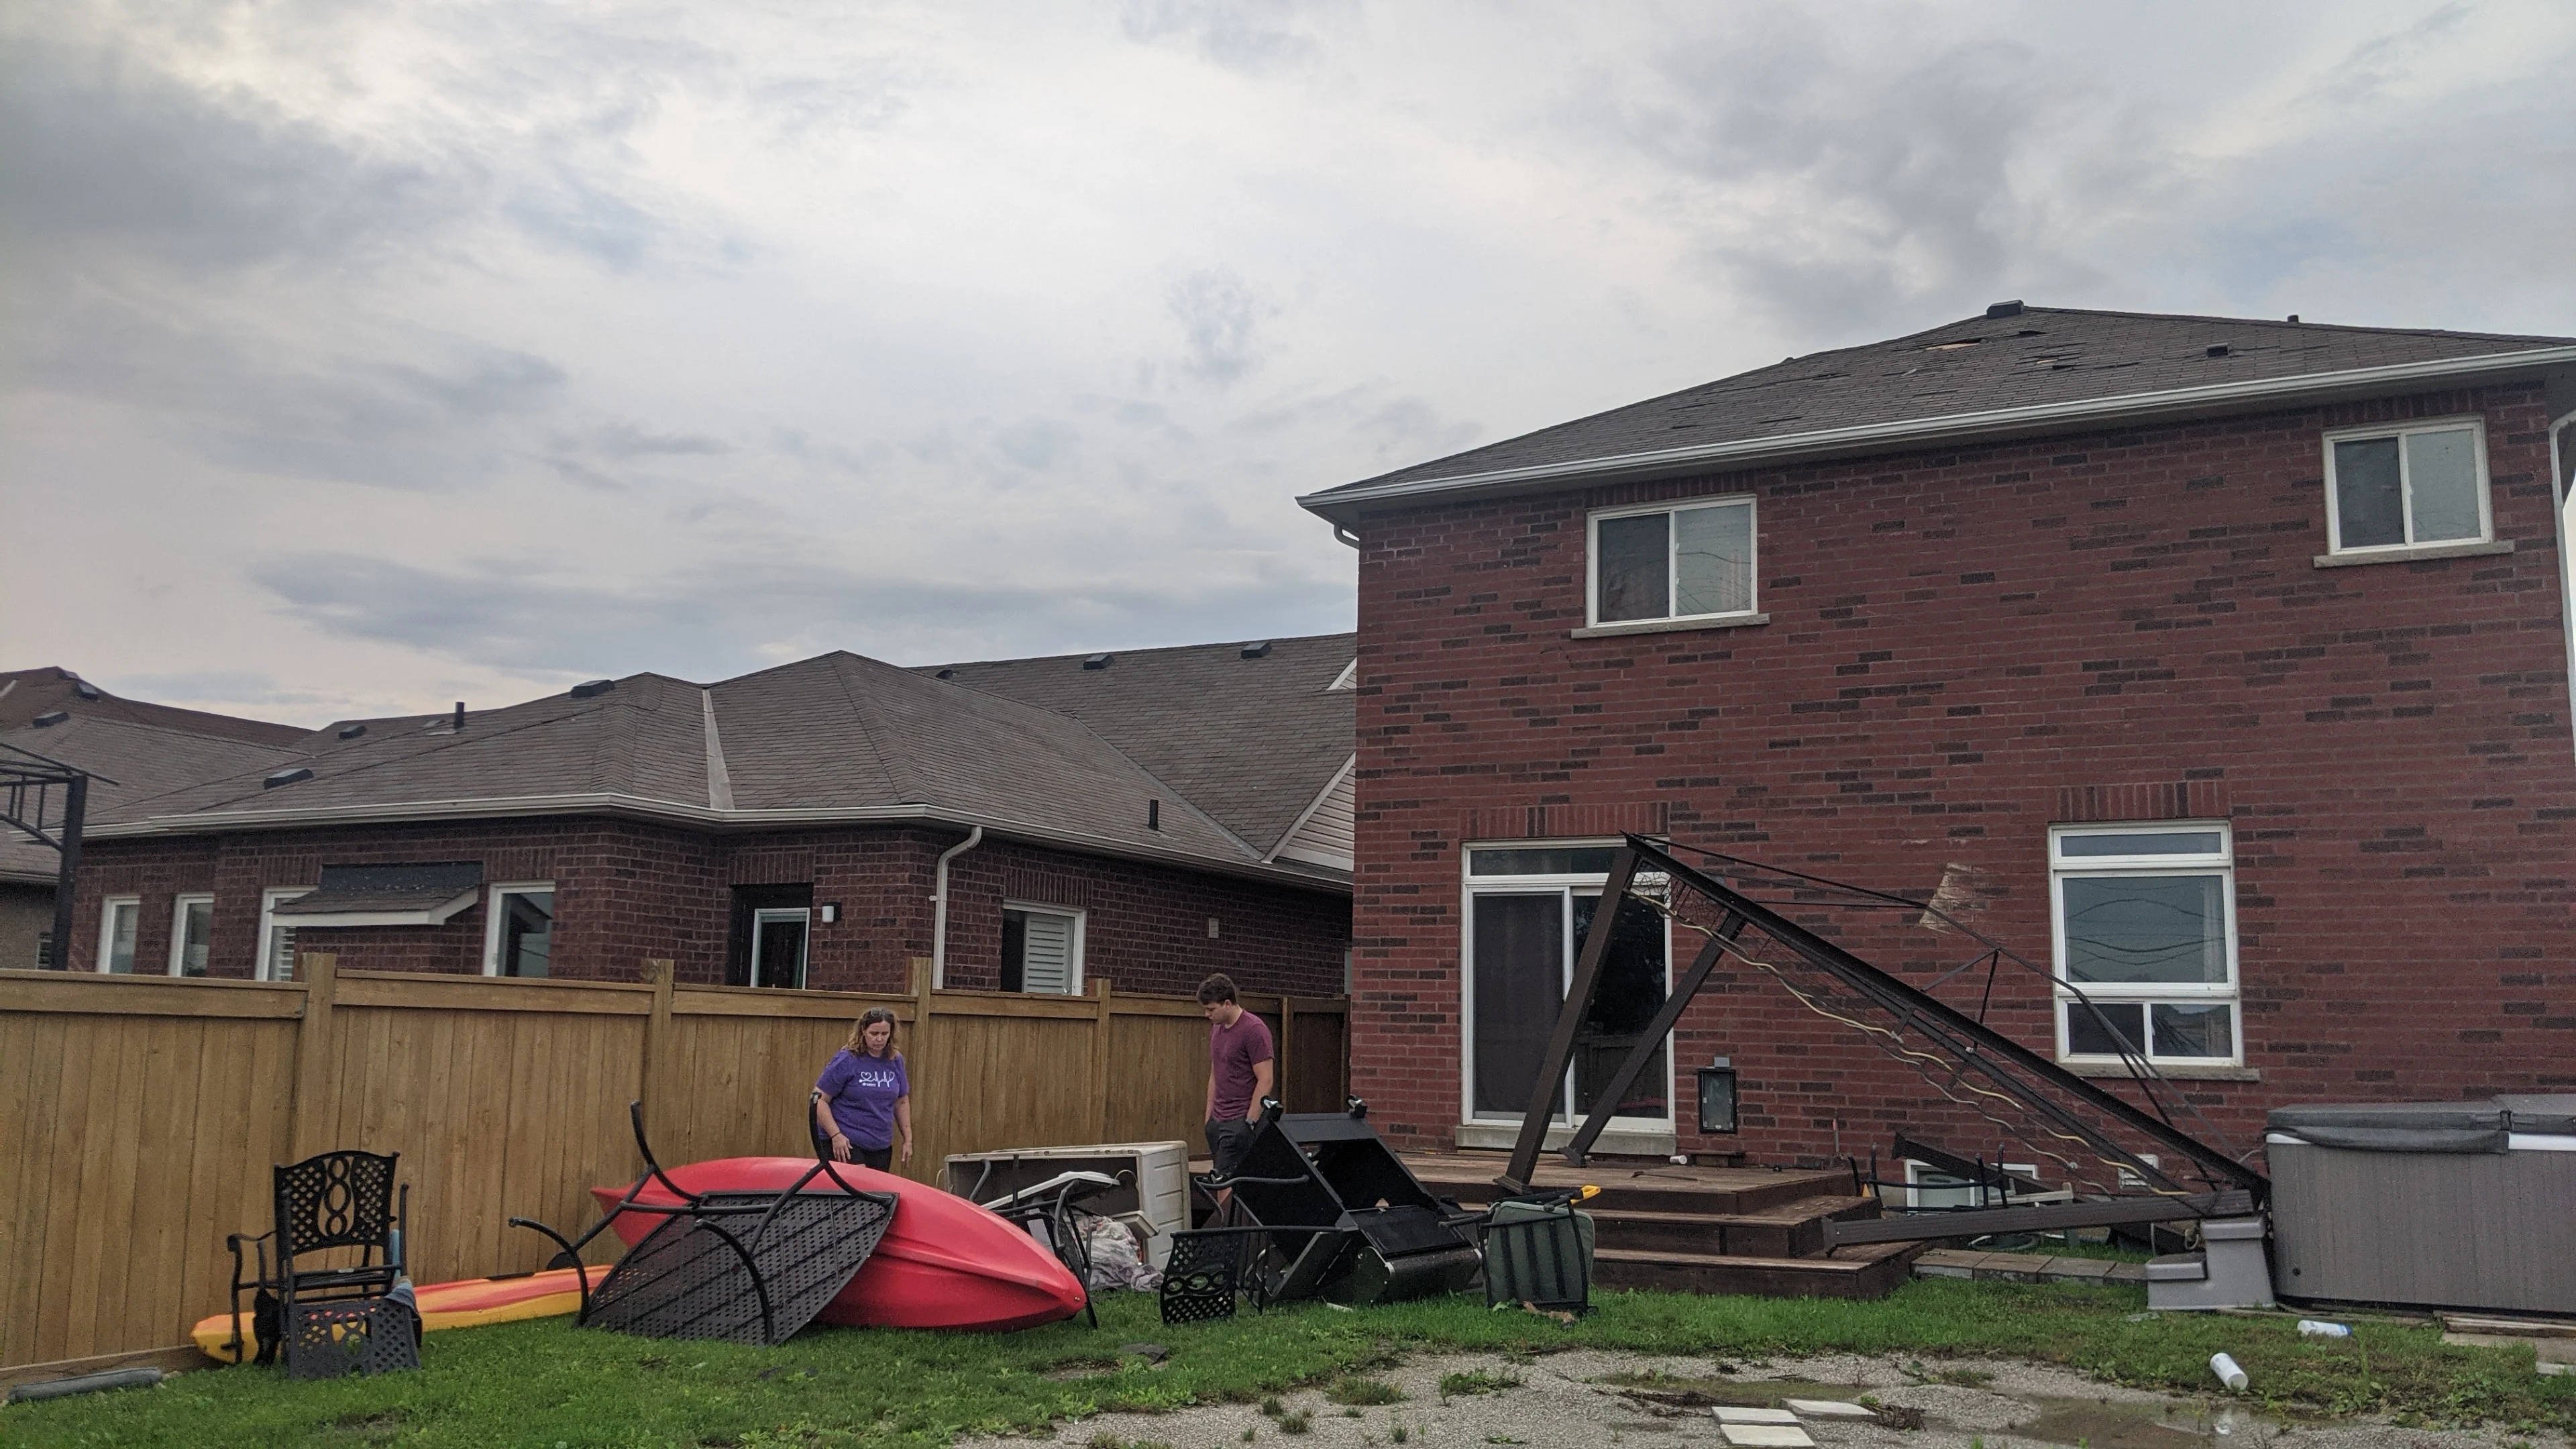 2 Barrie, Ontario, Tornado. July 15, 2021. Credit: Marta Czurylowicz